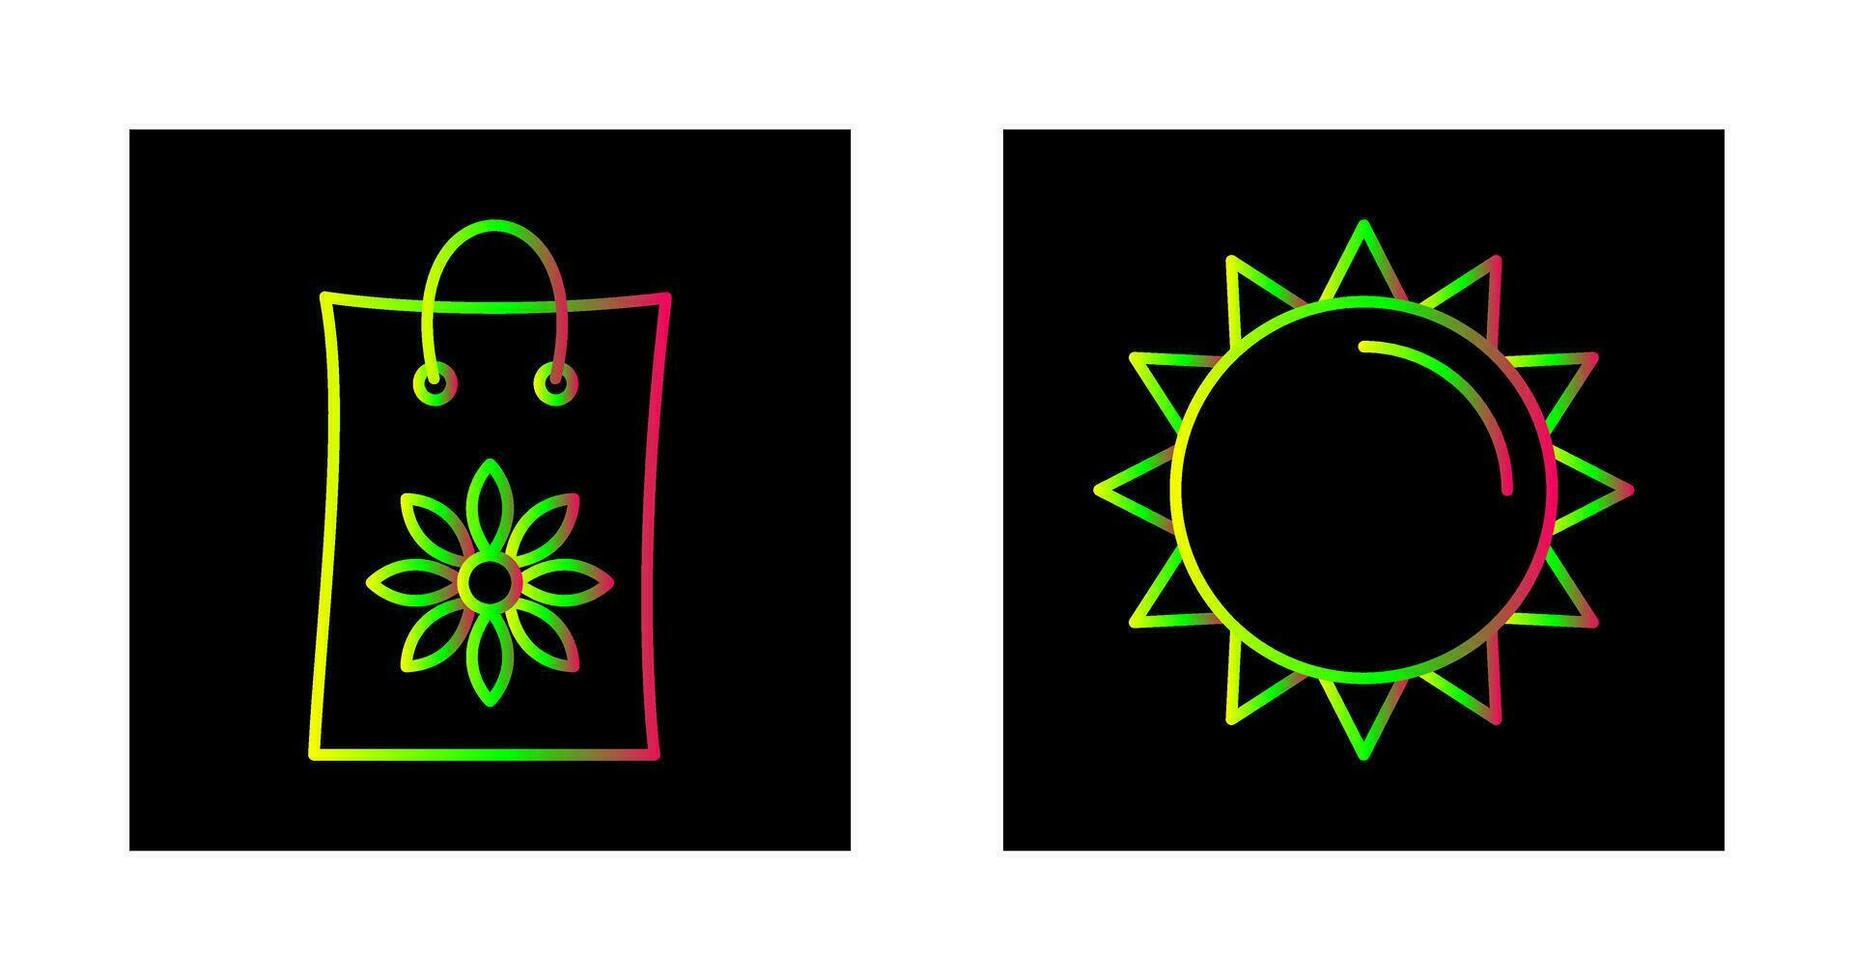 Pesticide Bags and Sun Icon vector